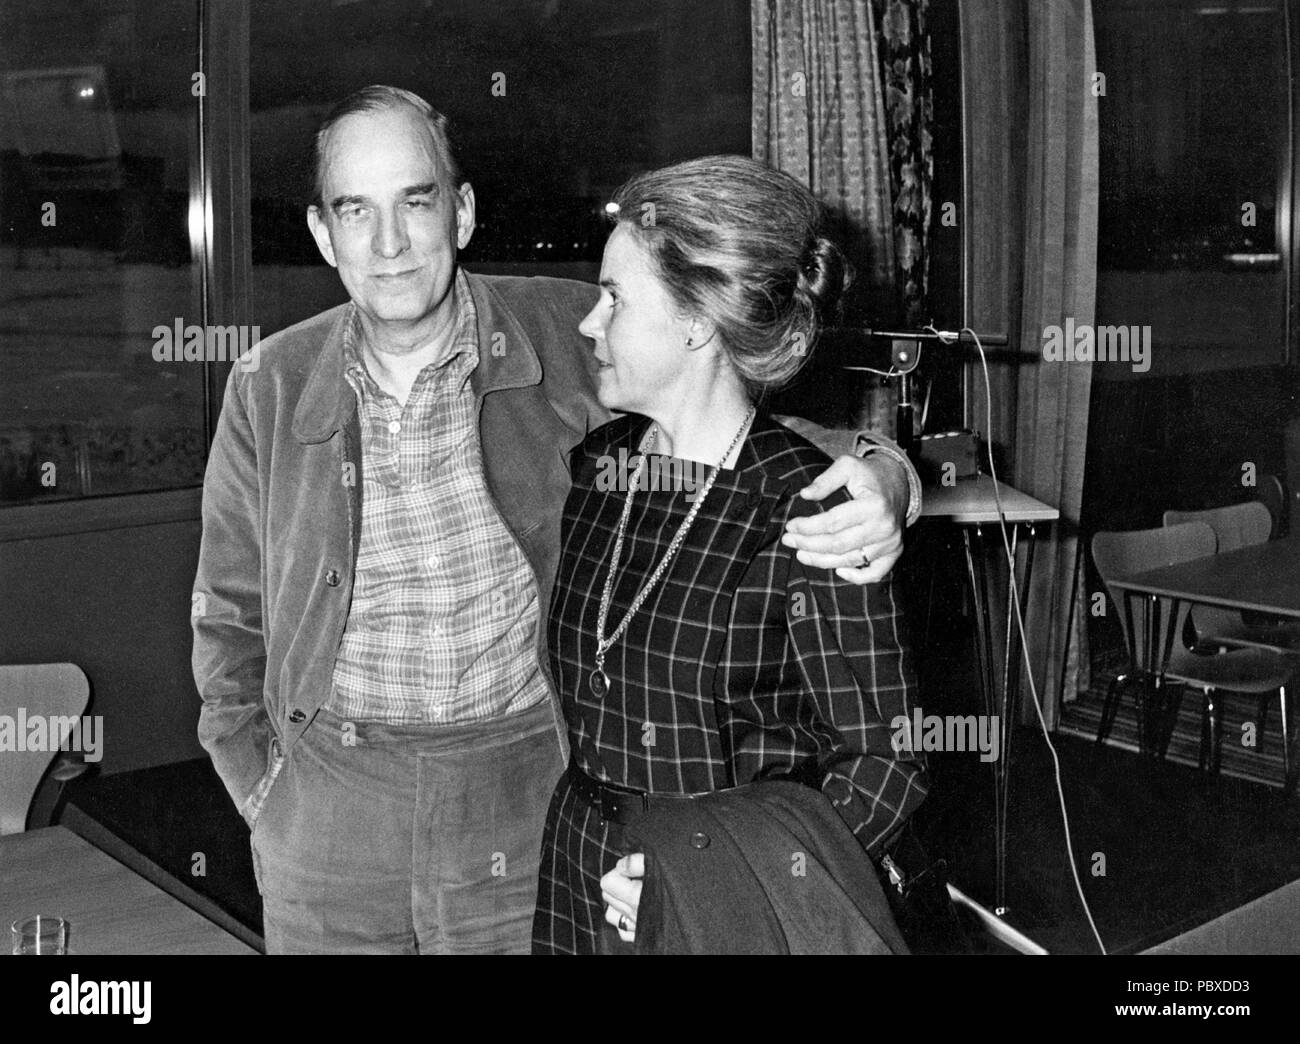 Ingmar Bergman. 1918-2007.  Swedish film director. Here together with his wife Ingrid von Rosen. 1980 Stock Photo